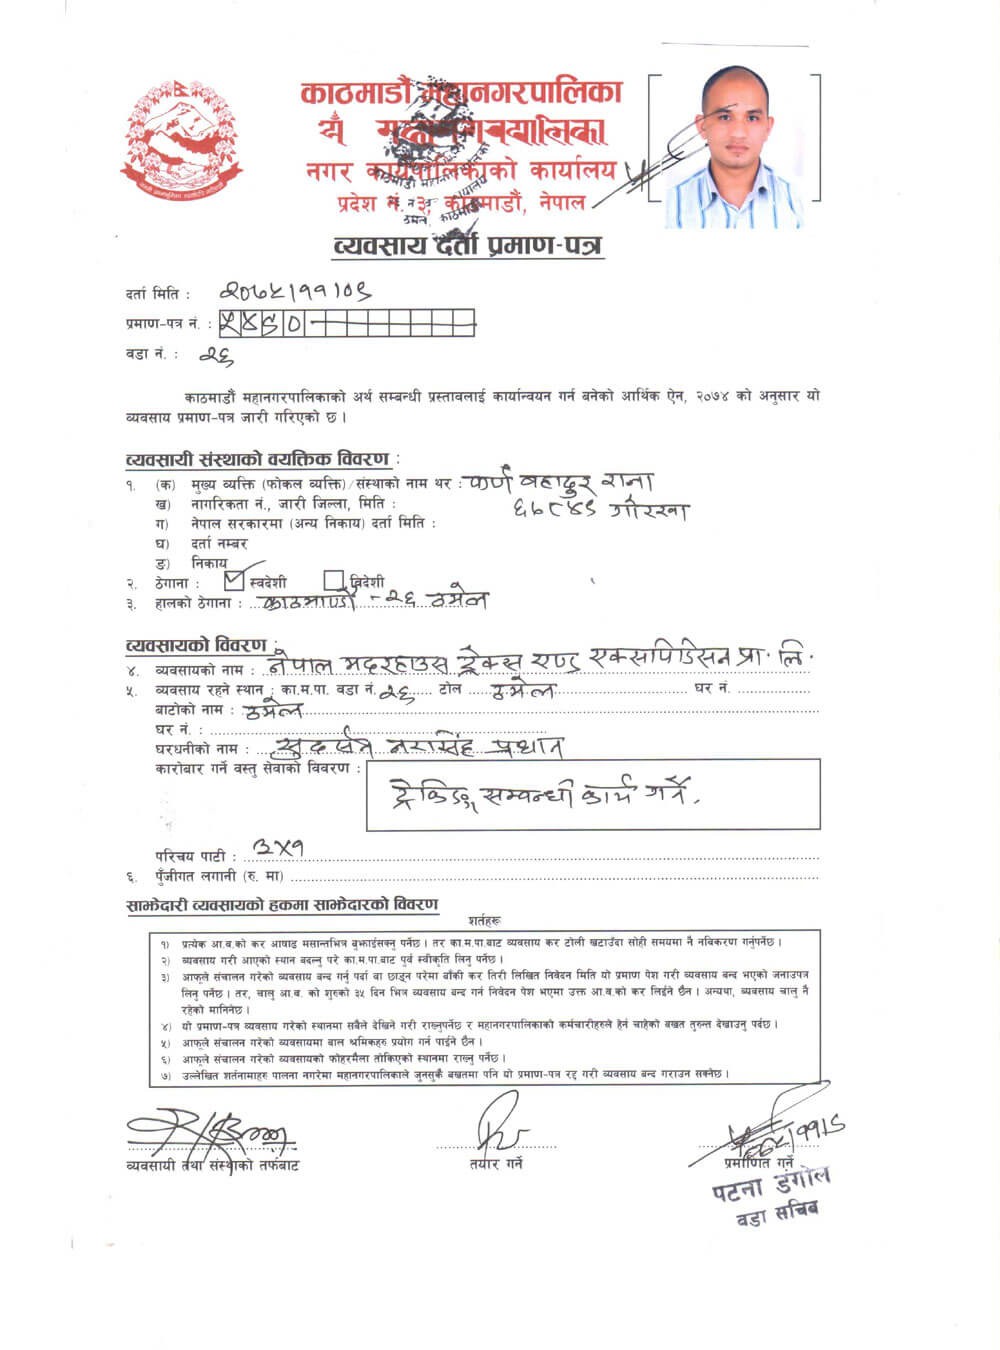 Kathmandu Metropolitan Registration